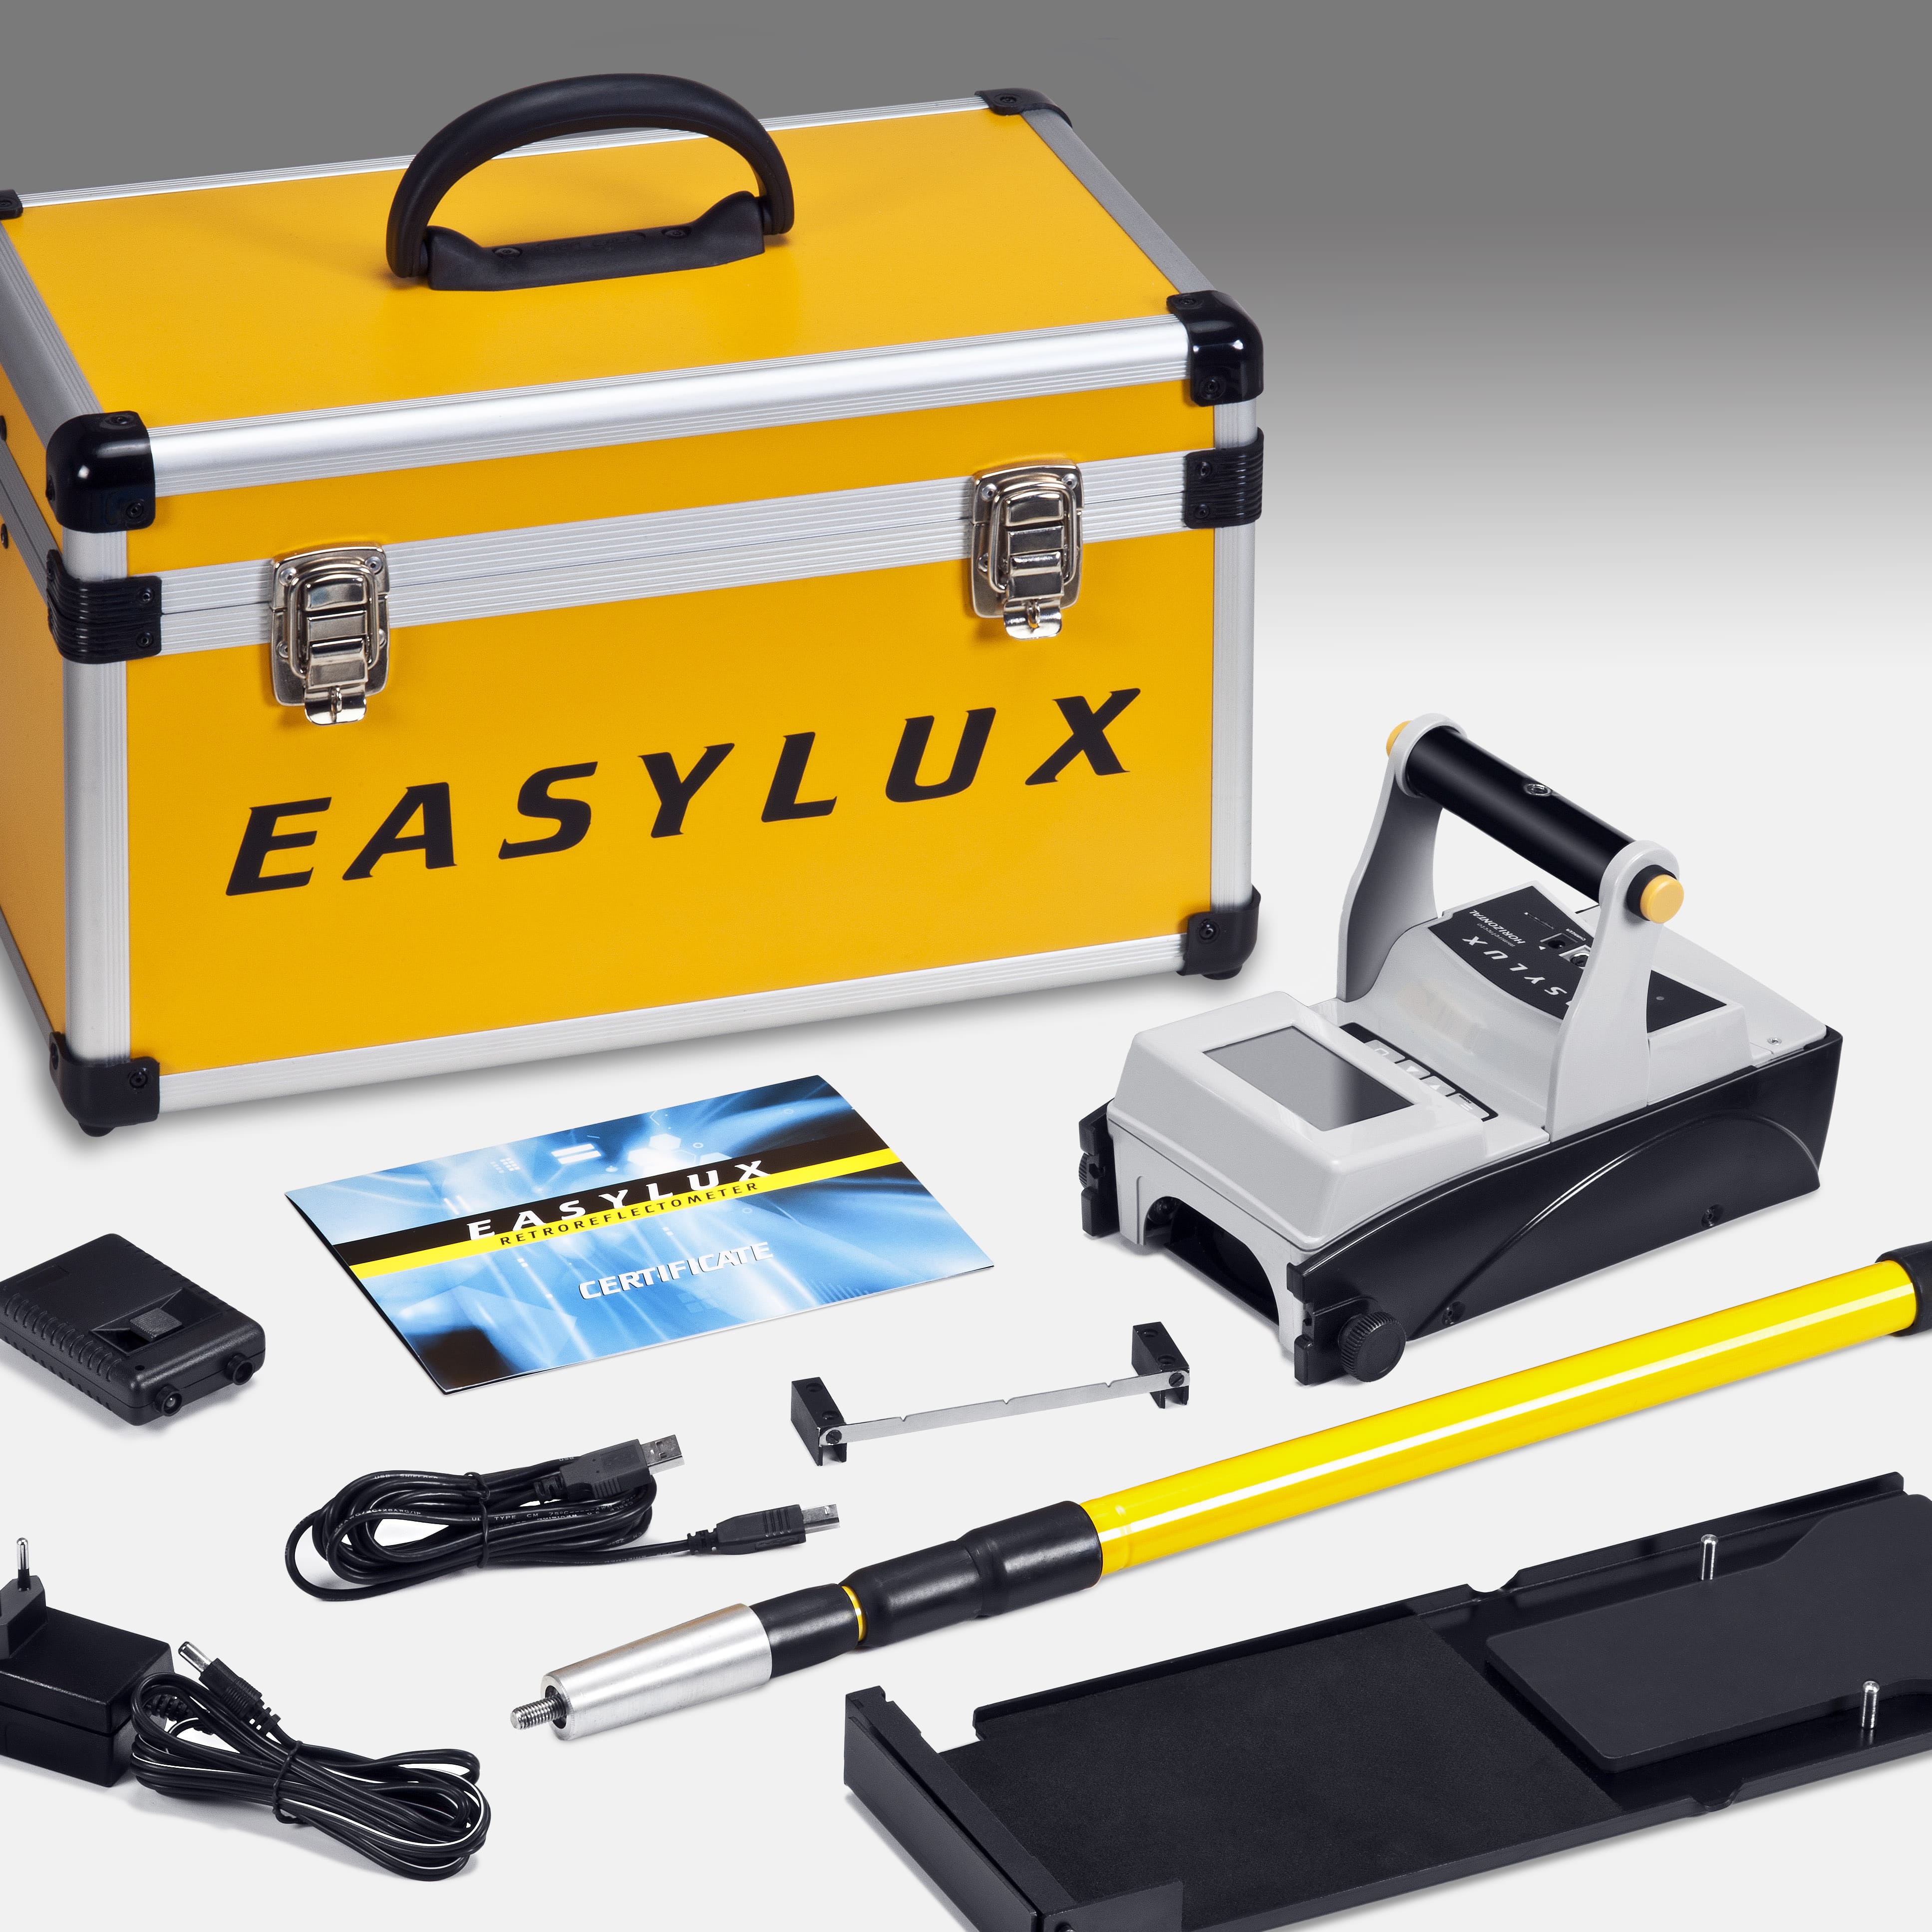 retroreflektometer - Easylux - ASTM E1710 / EN 1436 / for road markings